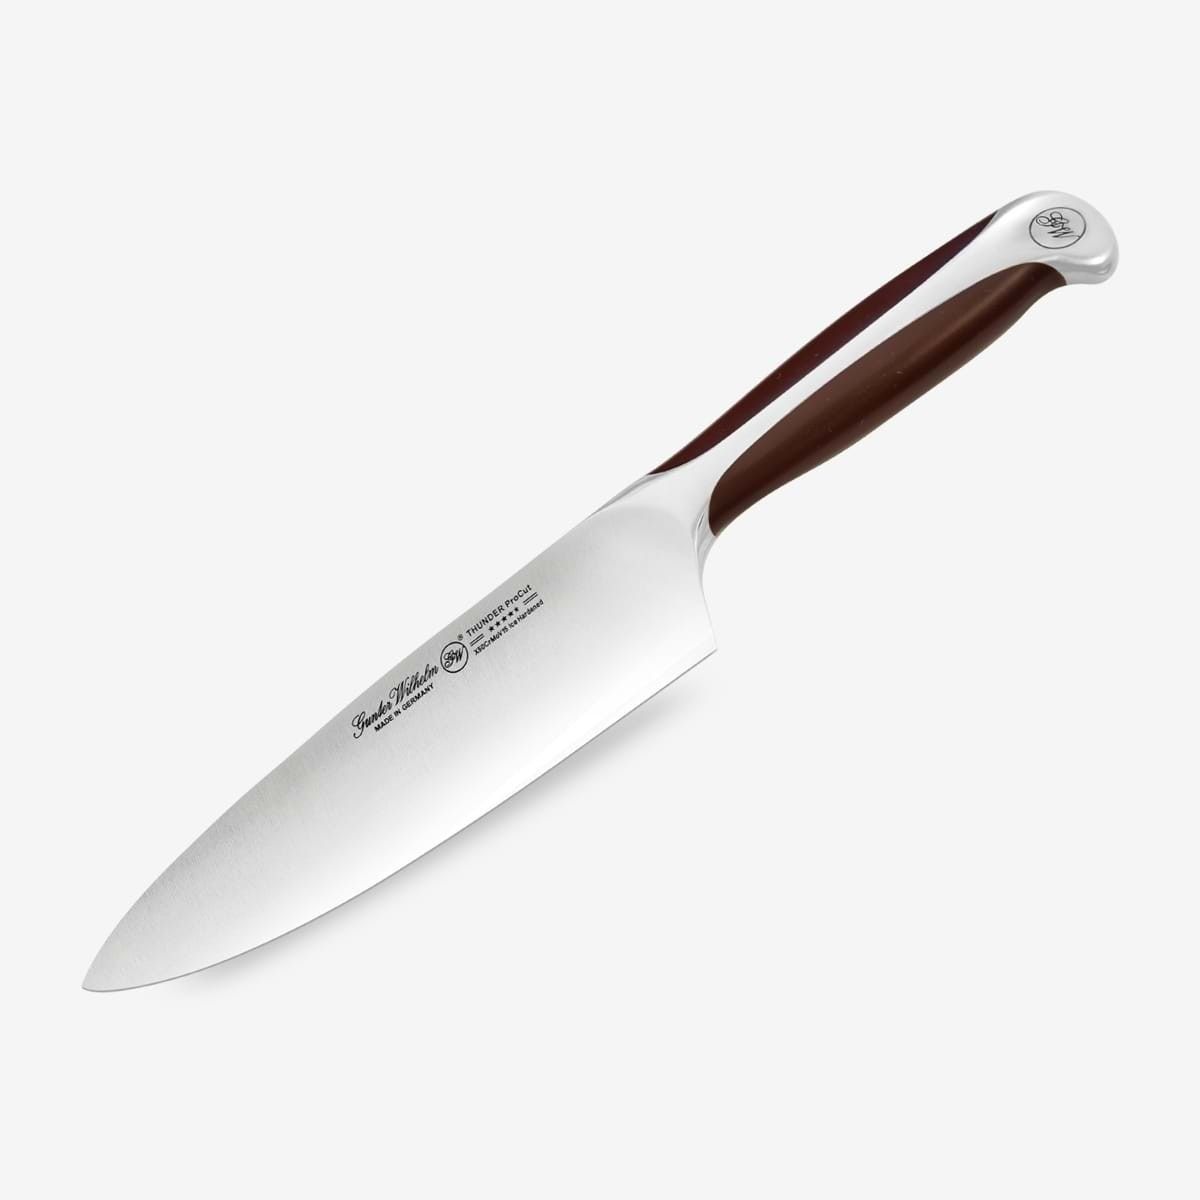 Gunter Wilhelm Thunder Chef Knife, 8 Inch | Brownish ABS Handle SKU: 50-508-0108